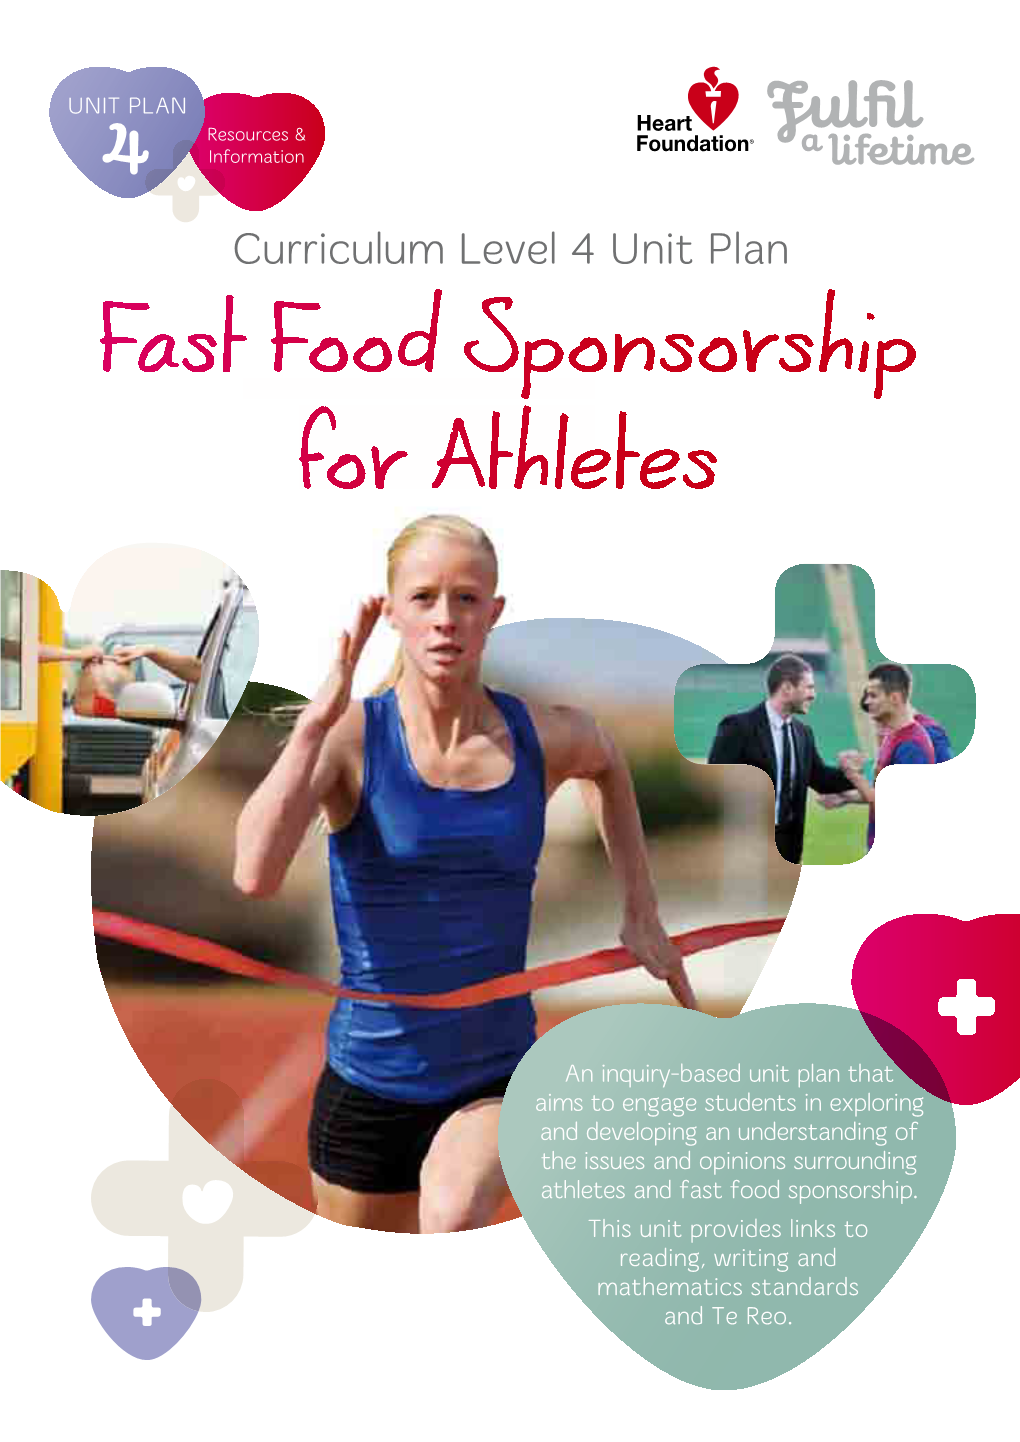 Fast Food Sponsorship for Athletes